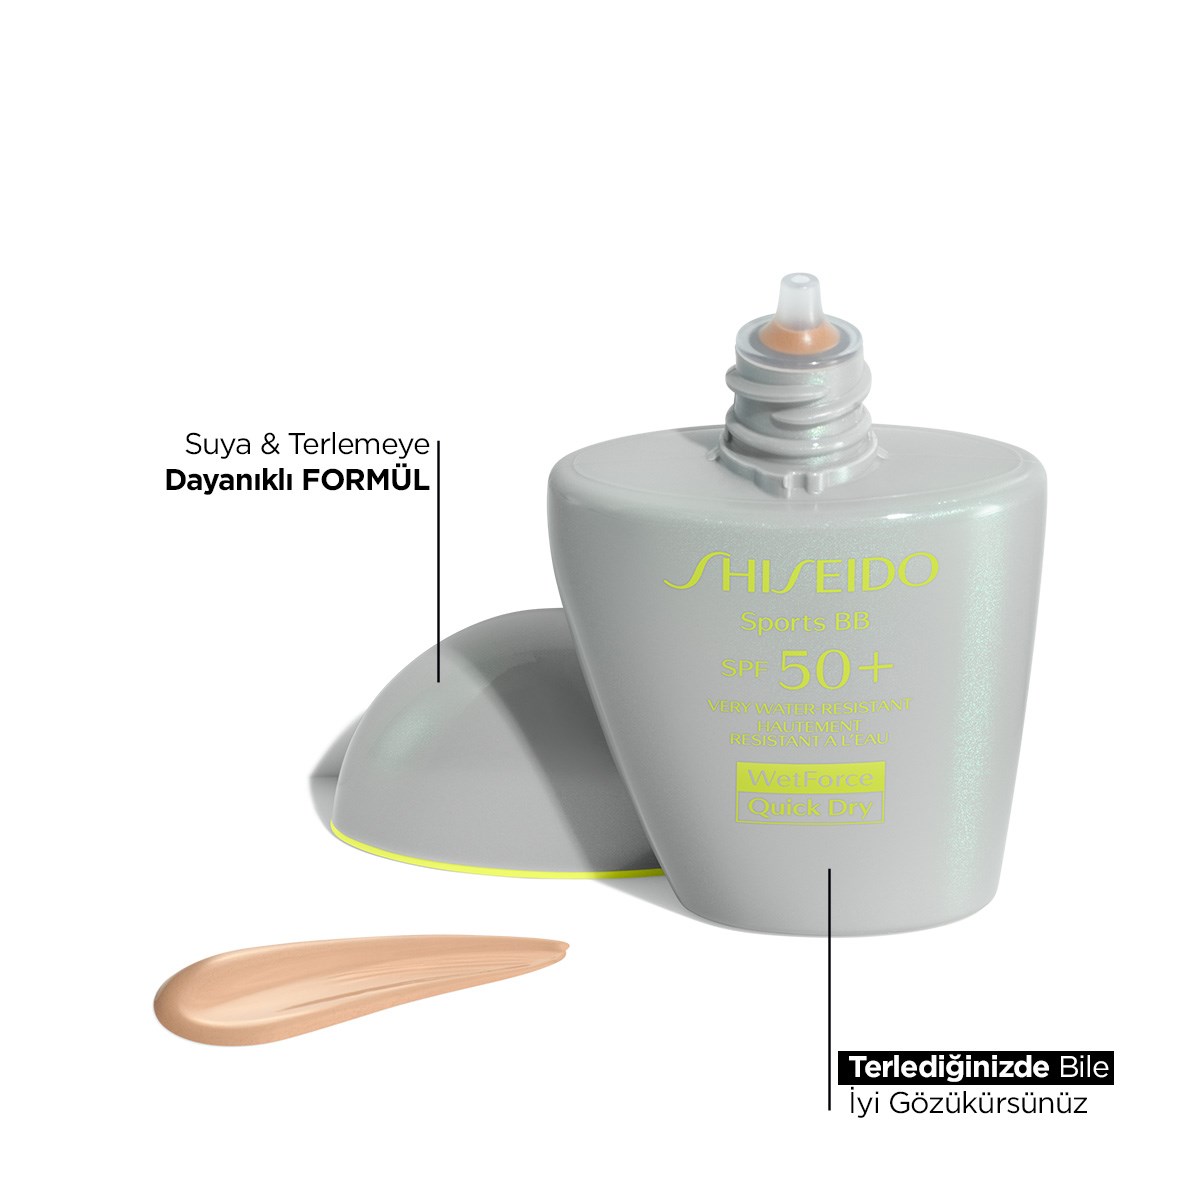 Shiseido Sports Bb Cream Spf50+ Wetforce/Quick Dry - BB Krem & Renkli  Nemlendirici | Makyaj Trendi